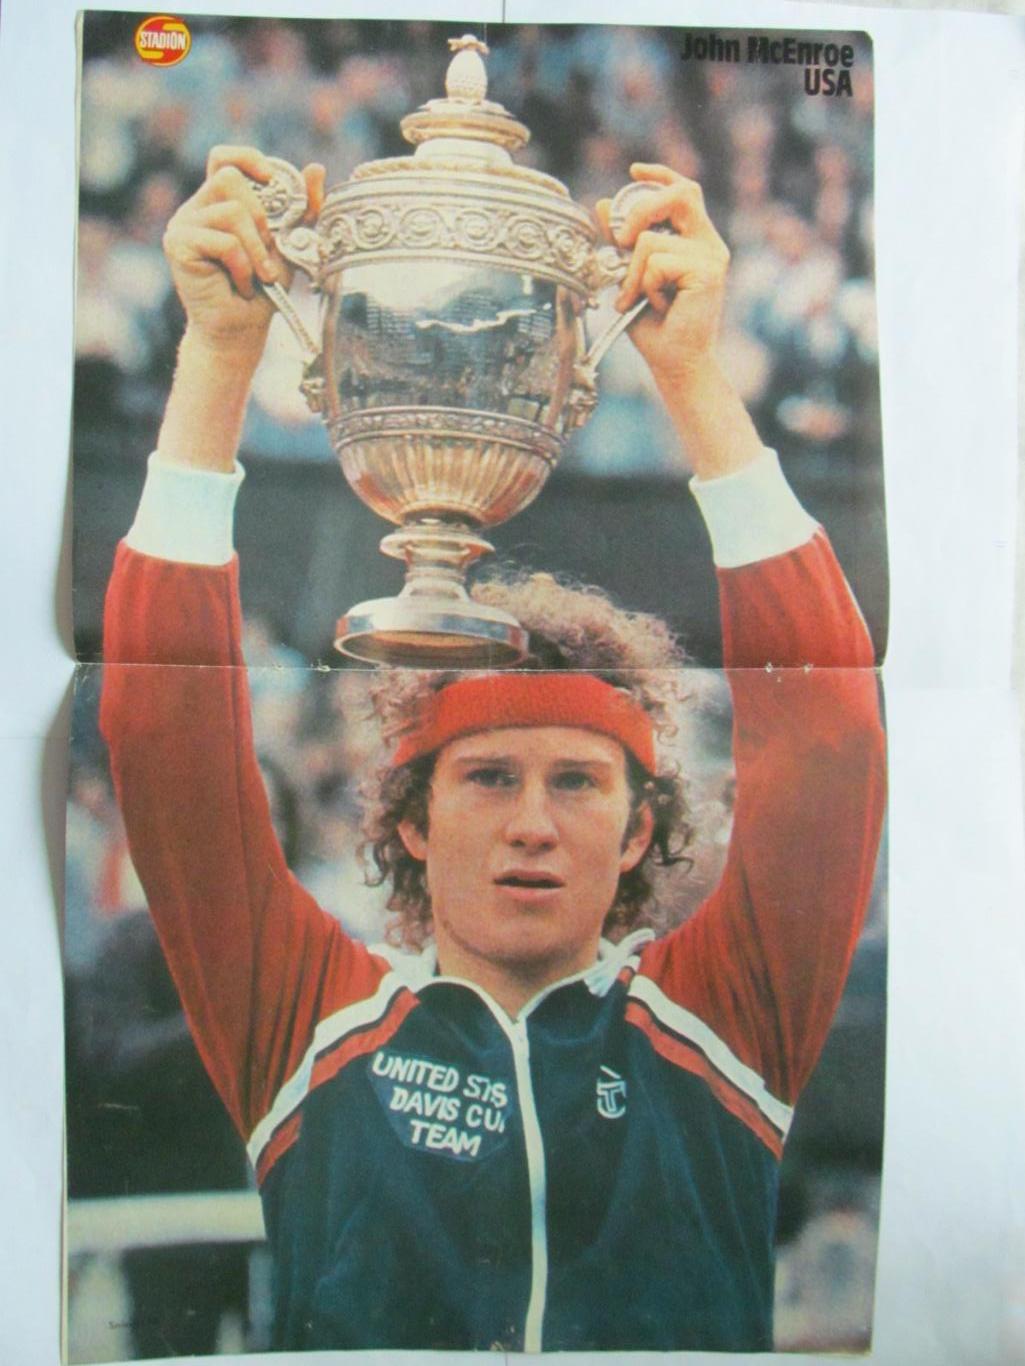 Журнал Стадион 1982.Постер Дж.Маккинрой